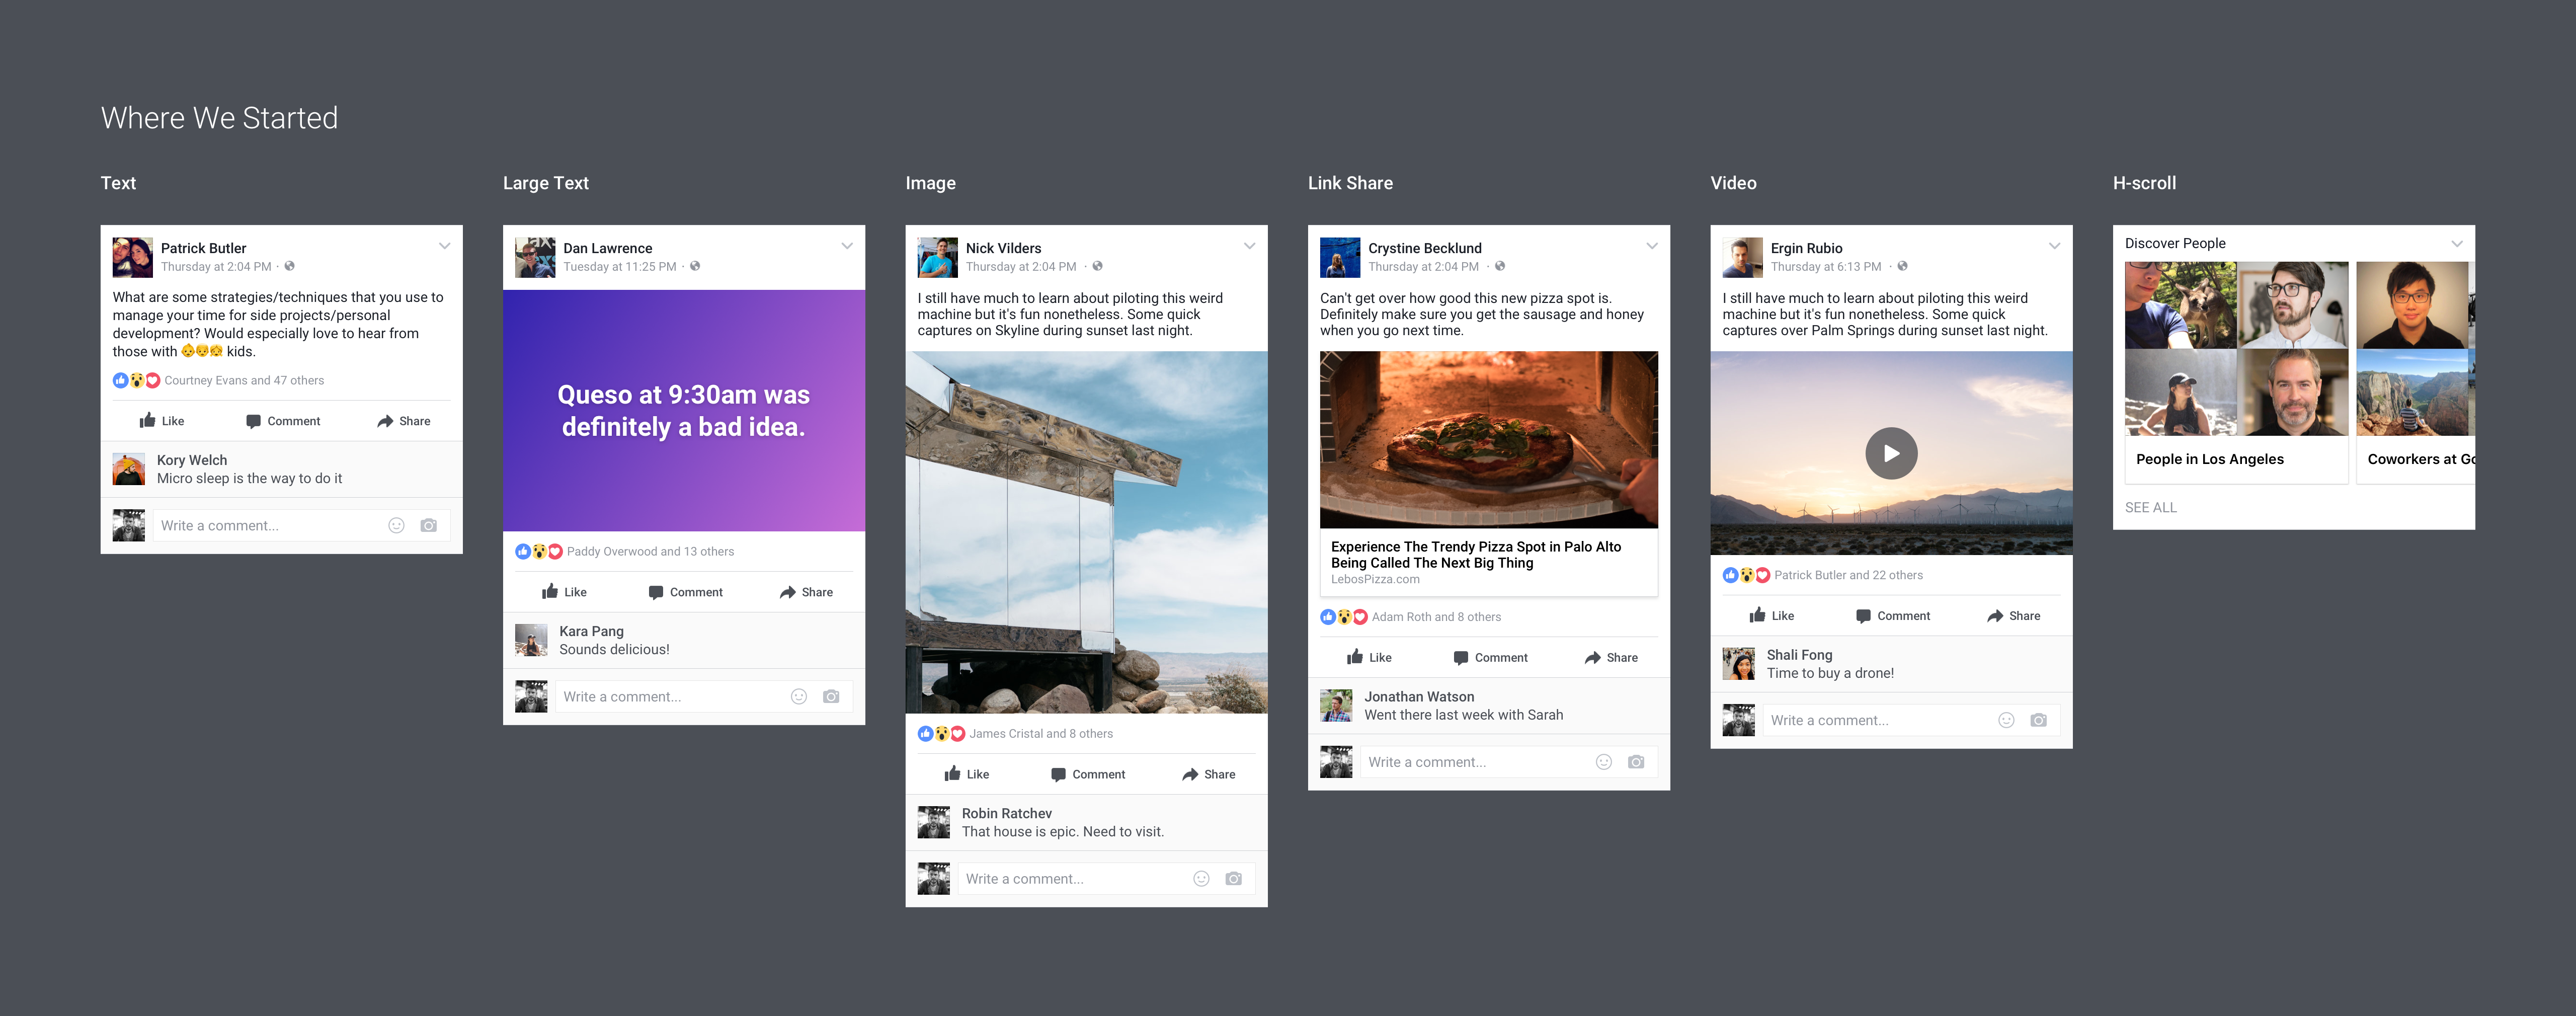 Evolving The Facebook News Feed To Serve You Better By Ryan Freitas Facebook Design Medium